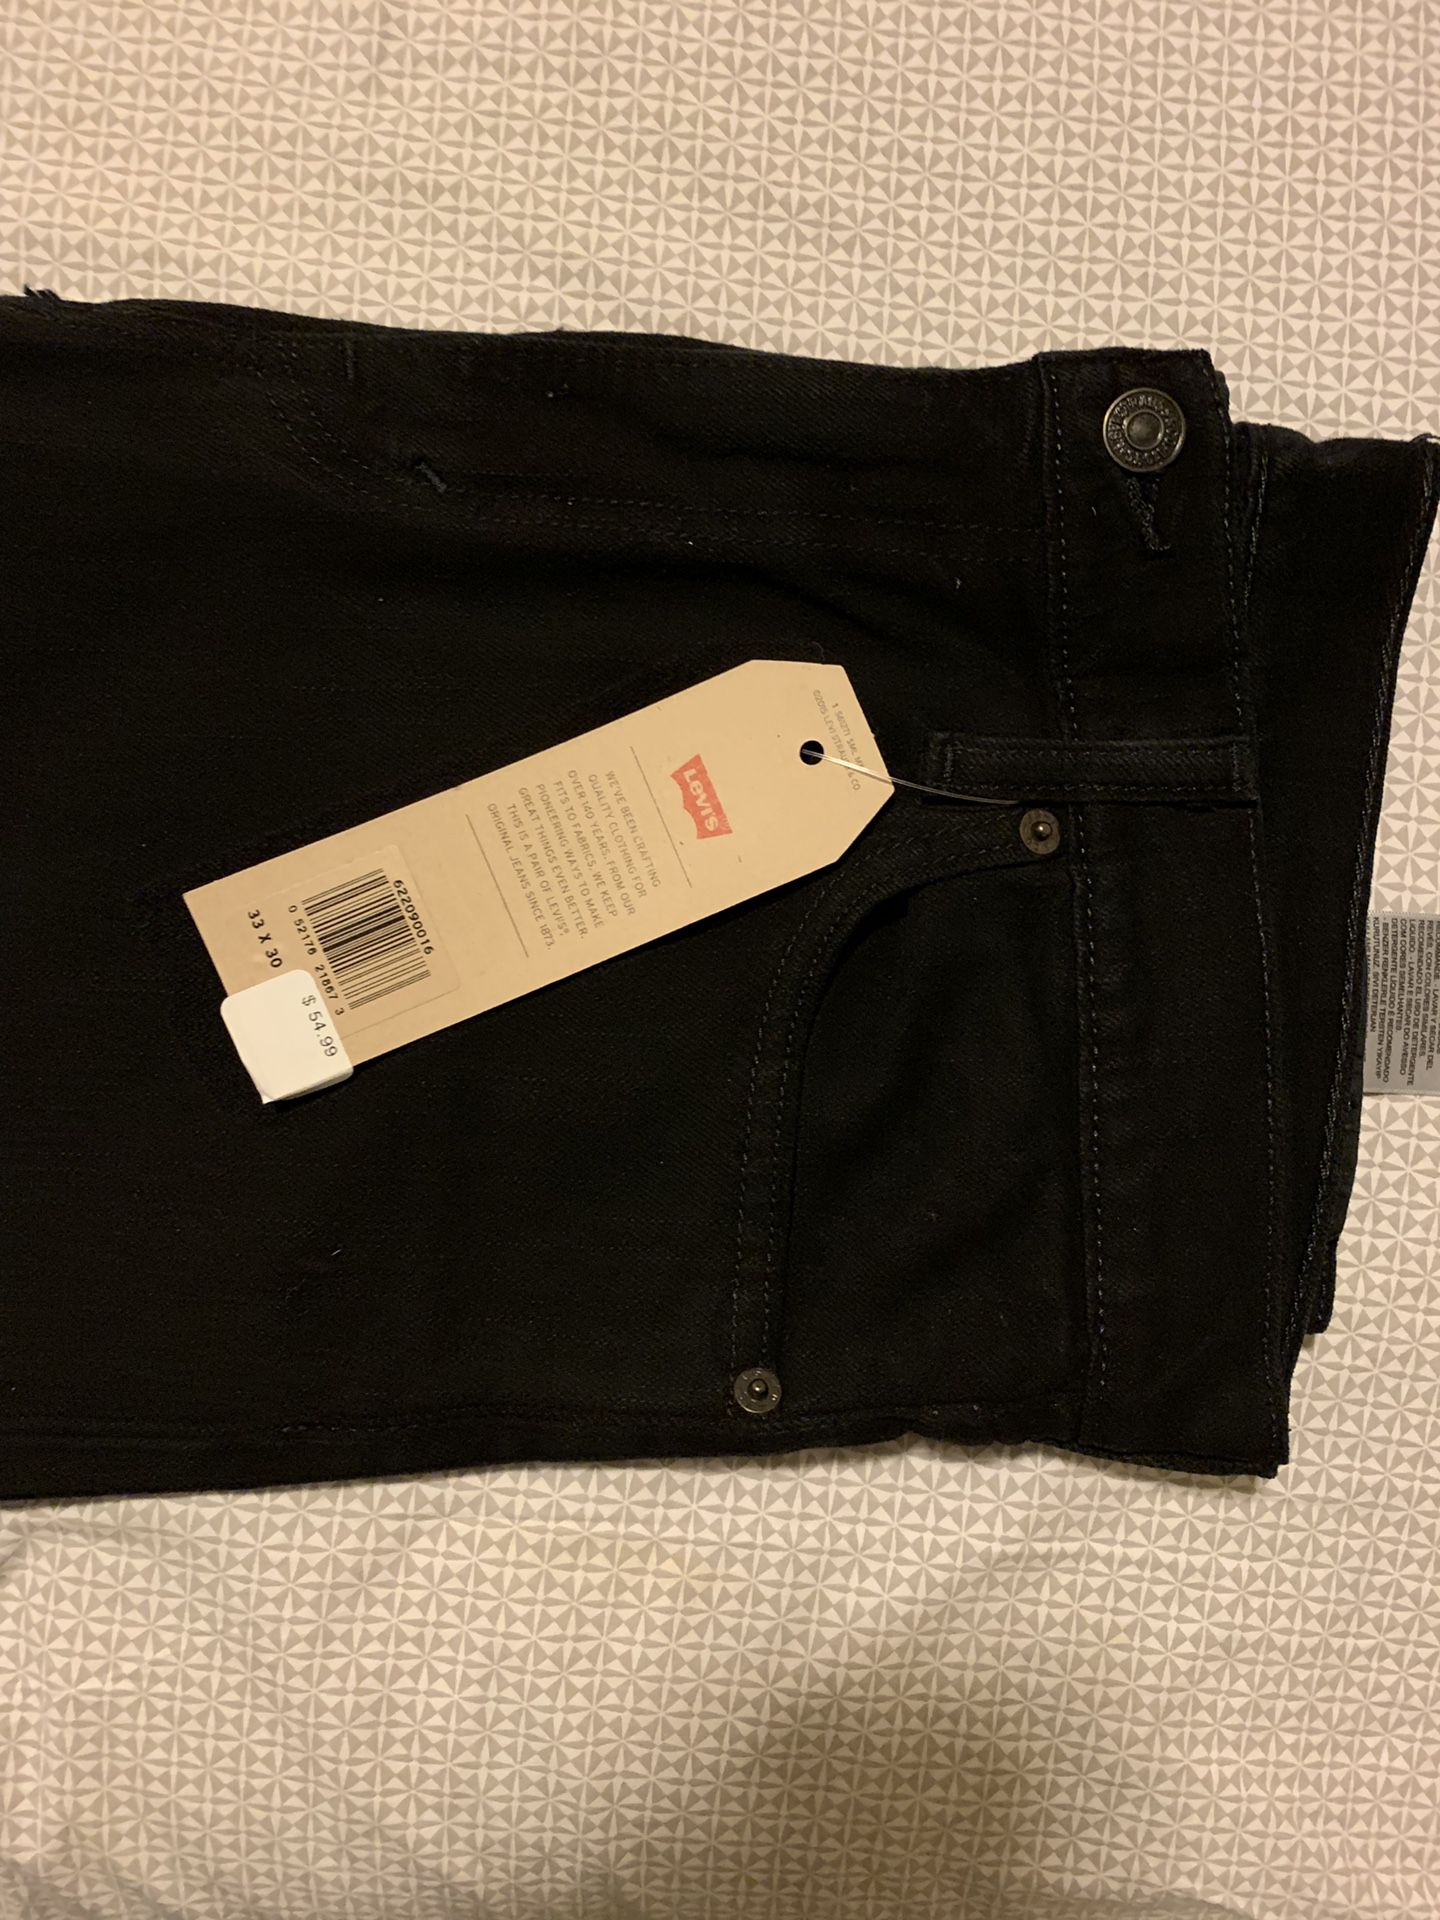 Men’s Black Jeans Levi 510 33x30 -New